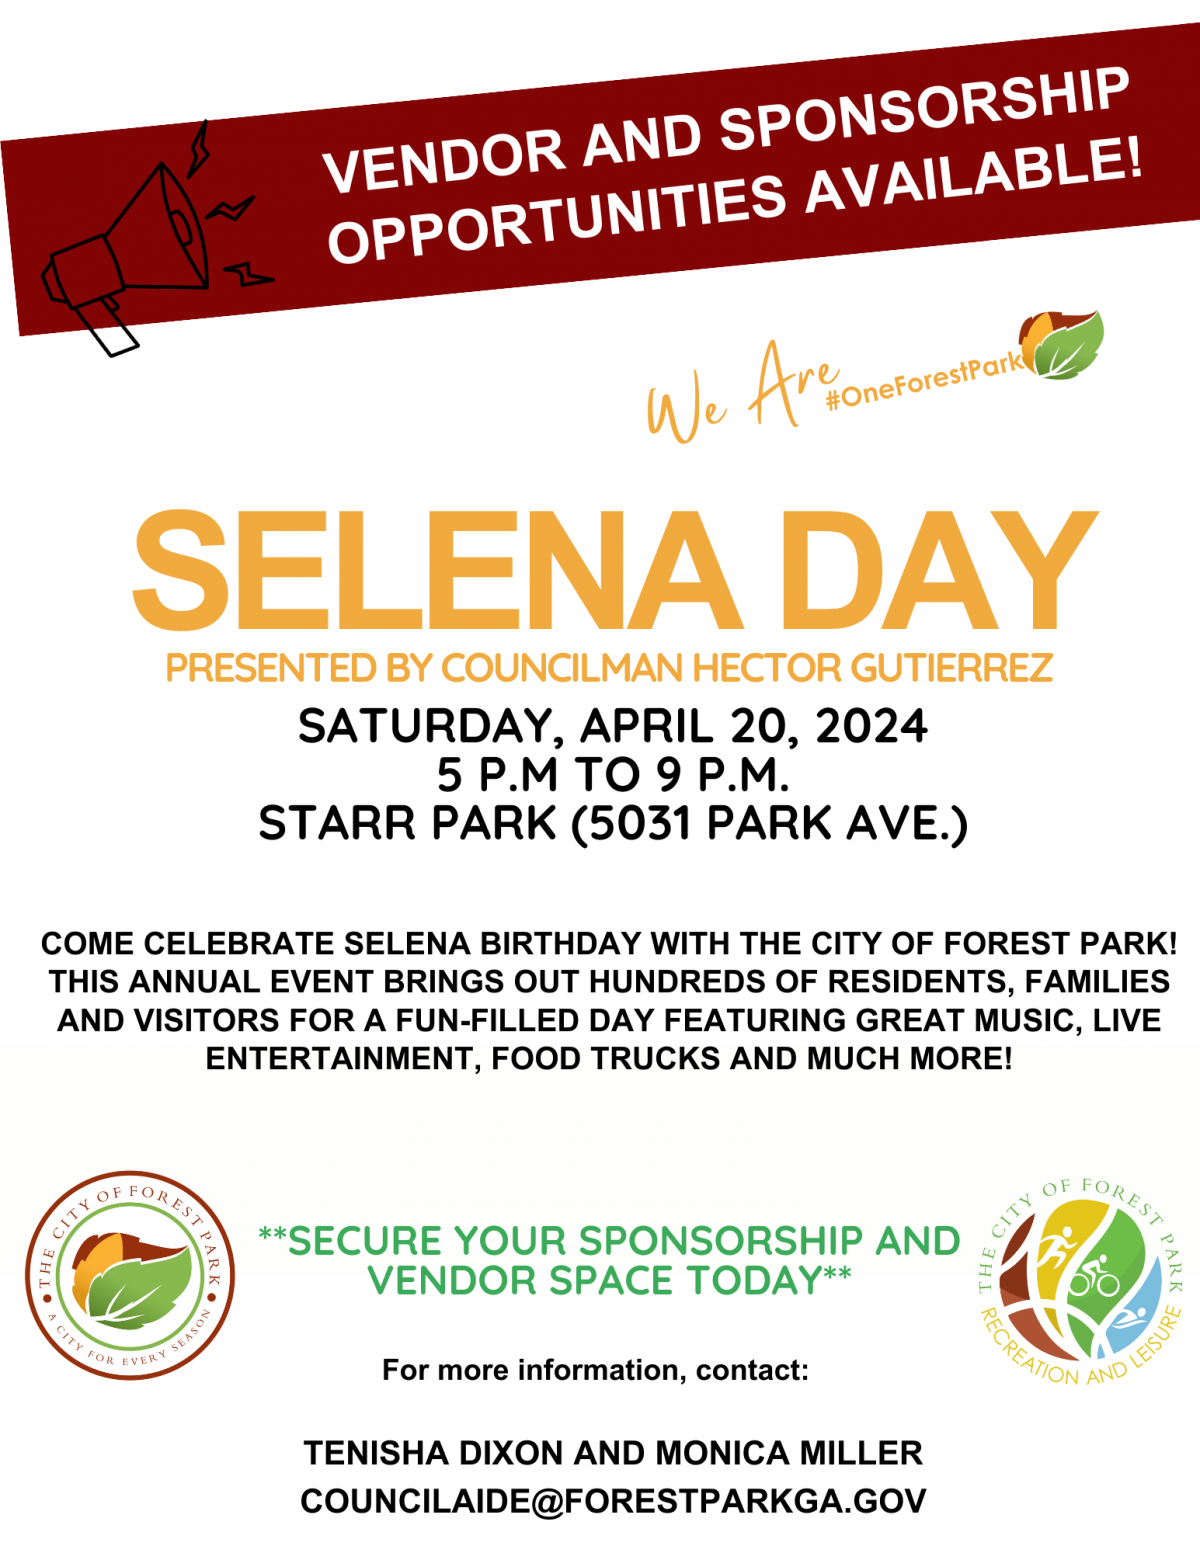 Selena Day